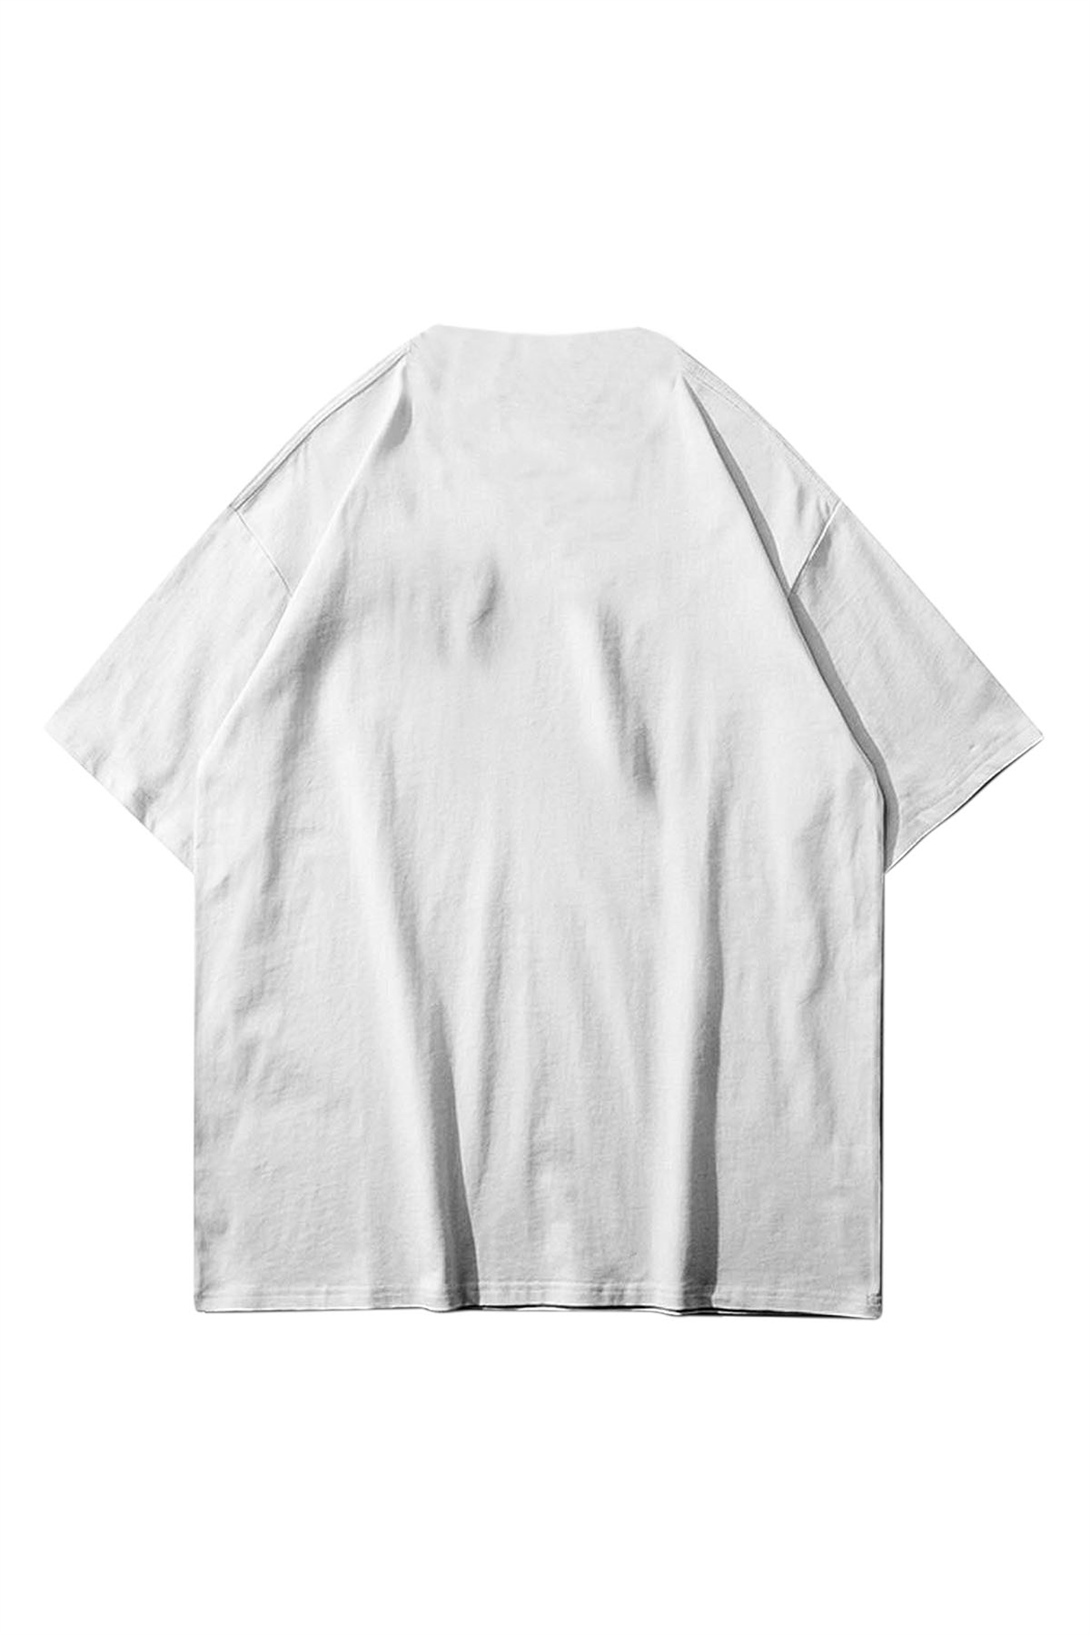 Trendiz Unisex Testing Asap Rocky Beyaz T Shirt